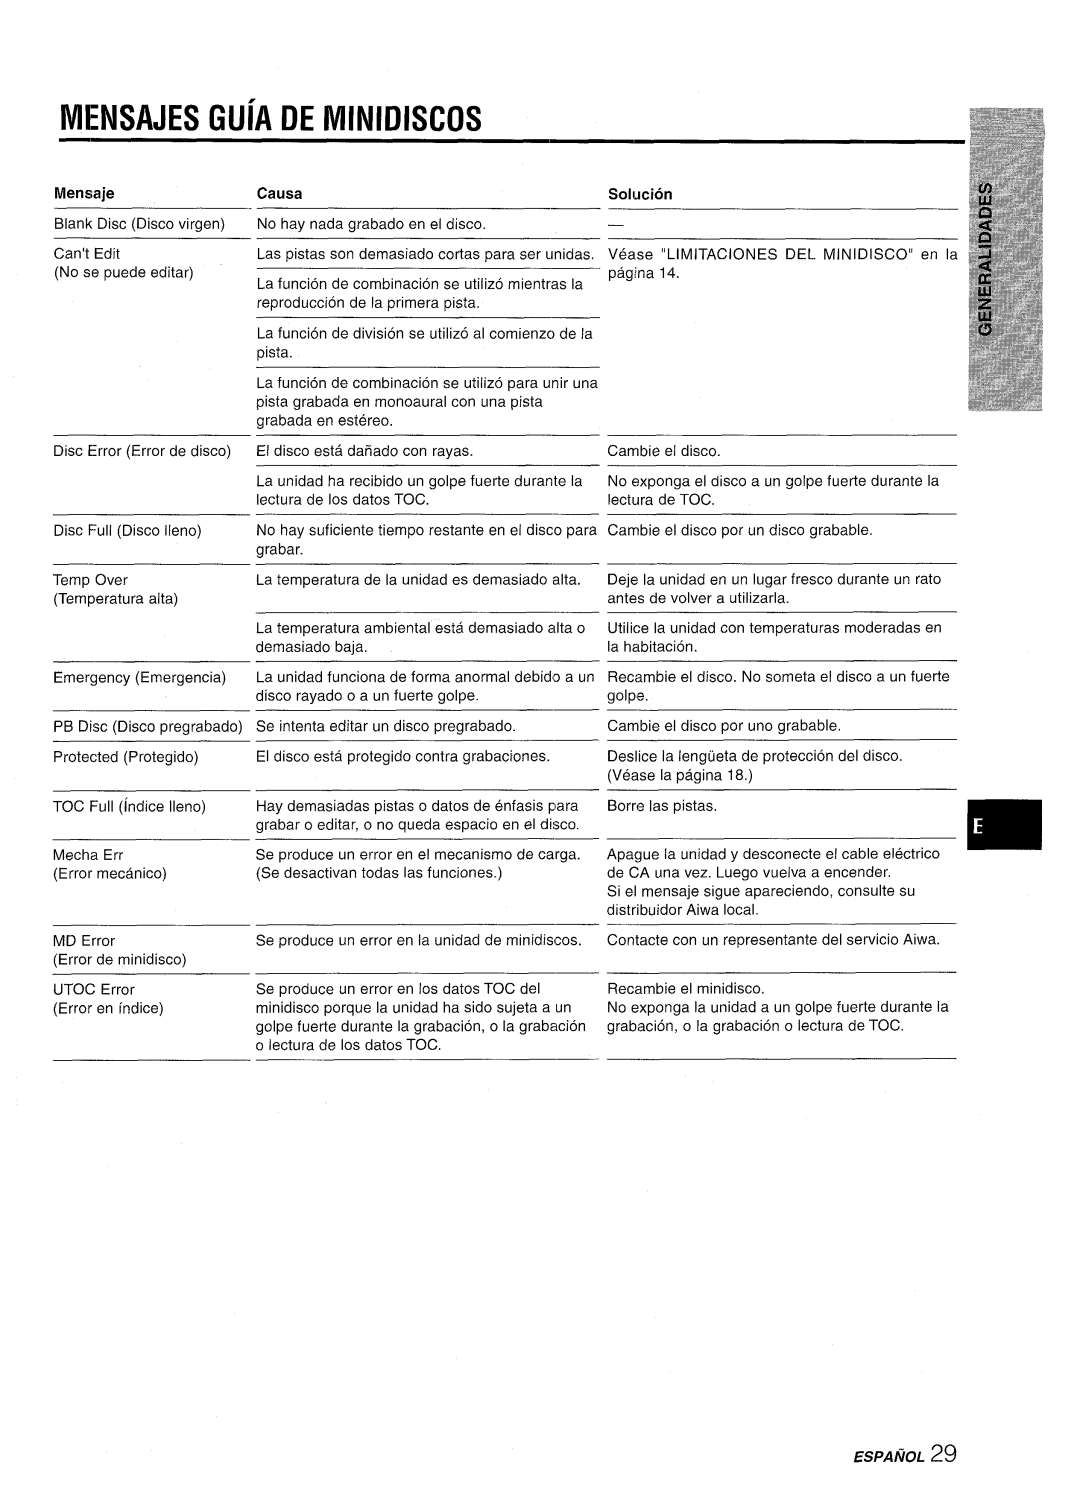 Aiwa CSD-MD50 manual GUiA, De Minidiscos, Mensajes, Mensiaje, Causa, Soiucion, Espanol 